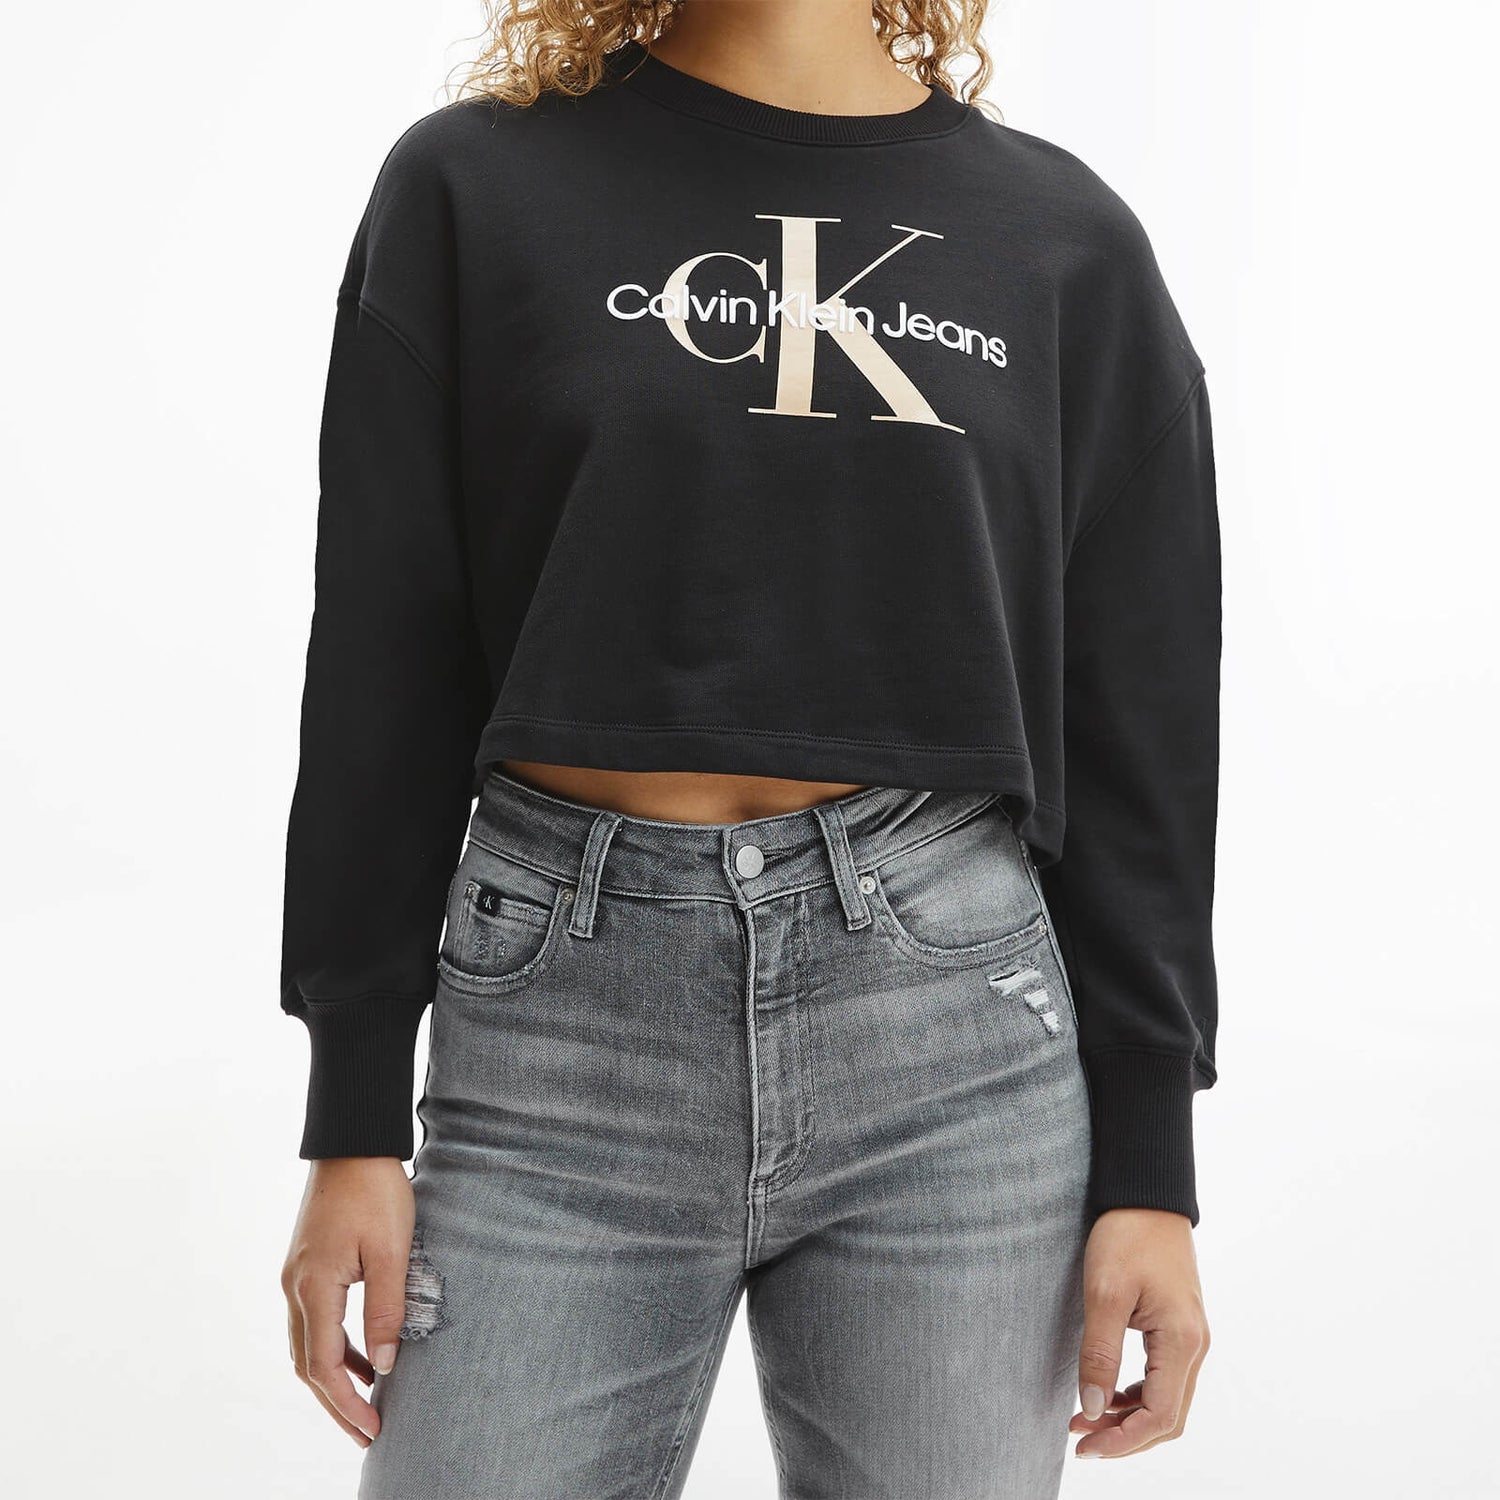 Calvin Klein Jeans Women's Seasonal Monogram Crew Neck Sweatshirt - Ck Black - XS